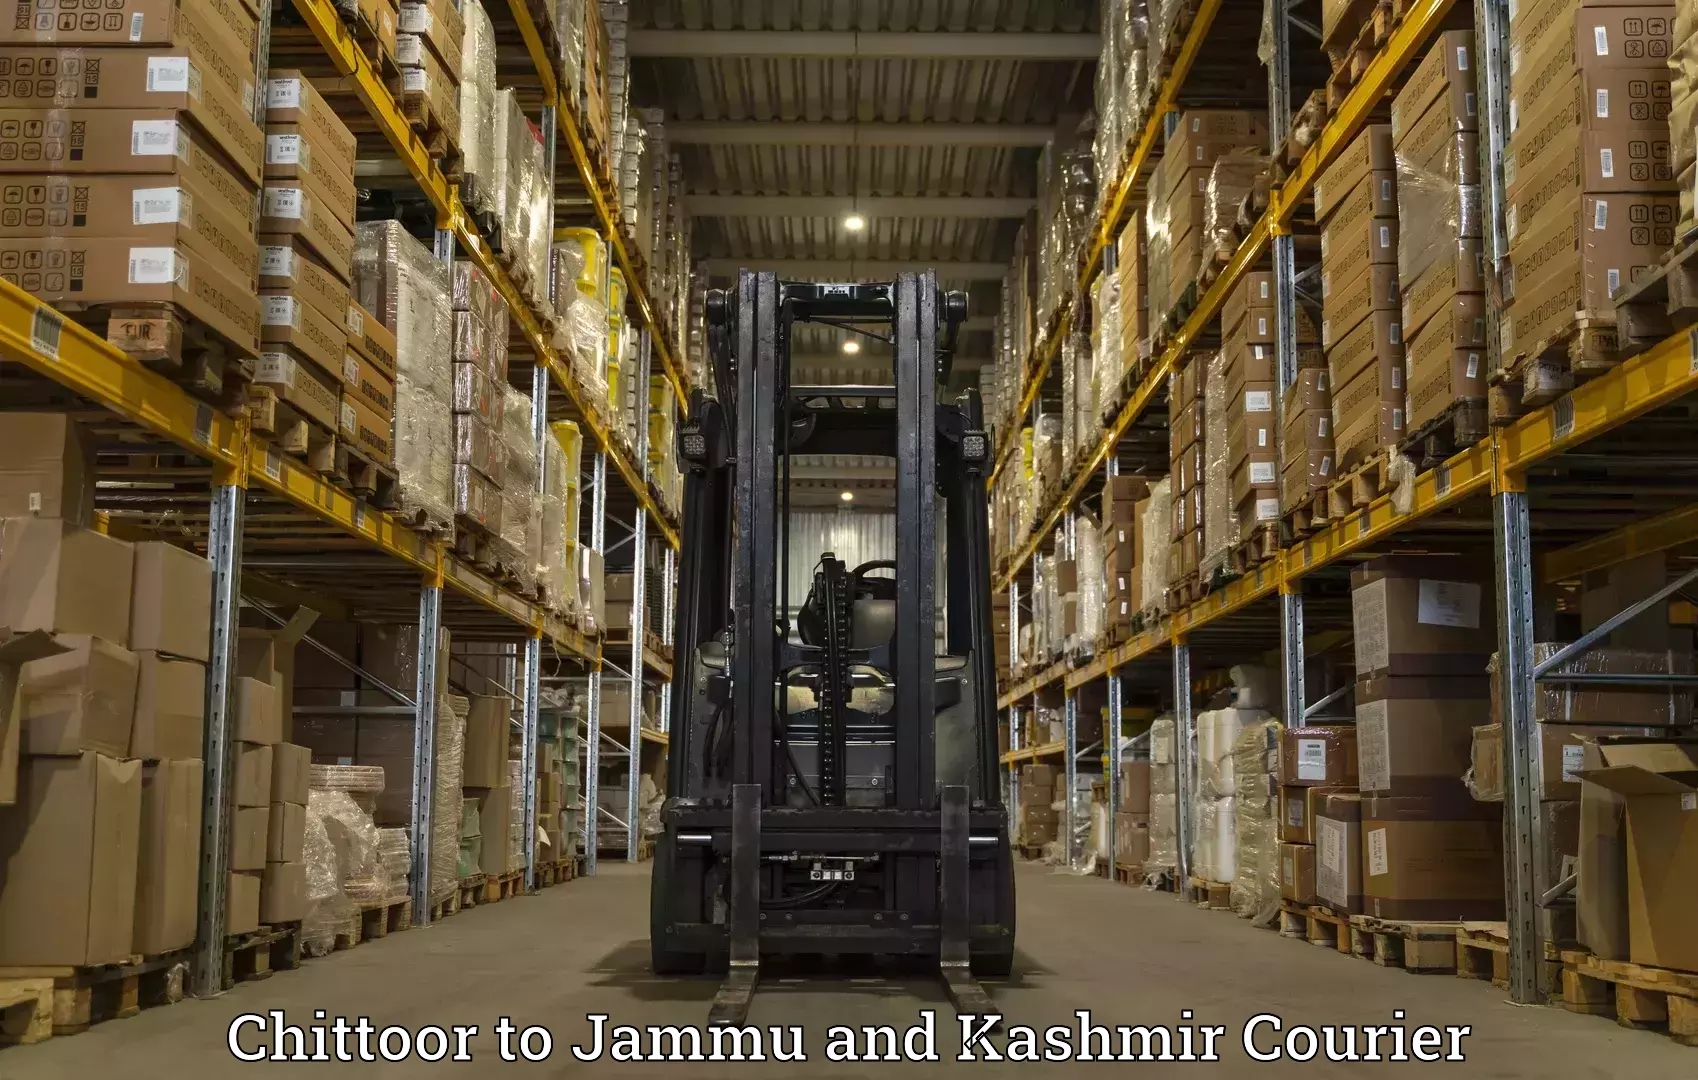 Shipping and handling Chittoor to Srinagar Kashmir